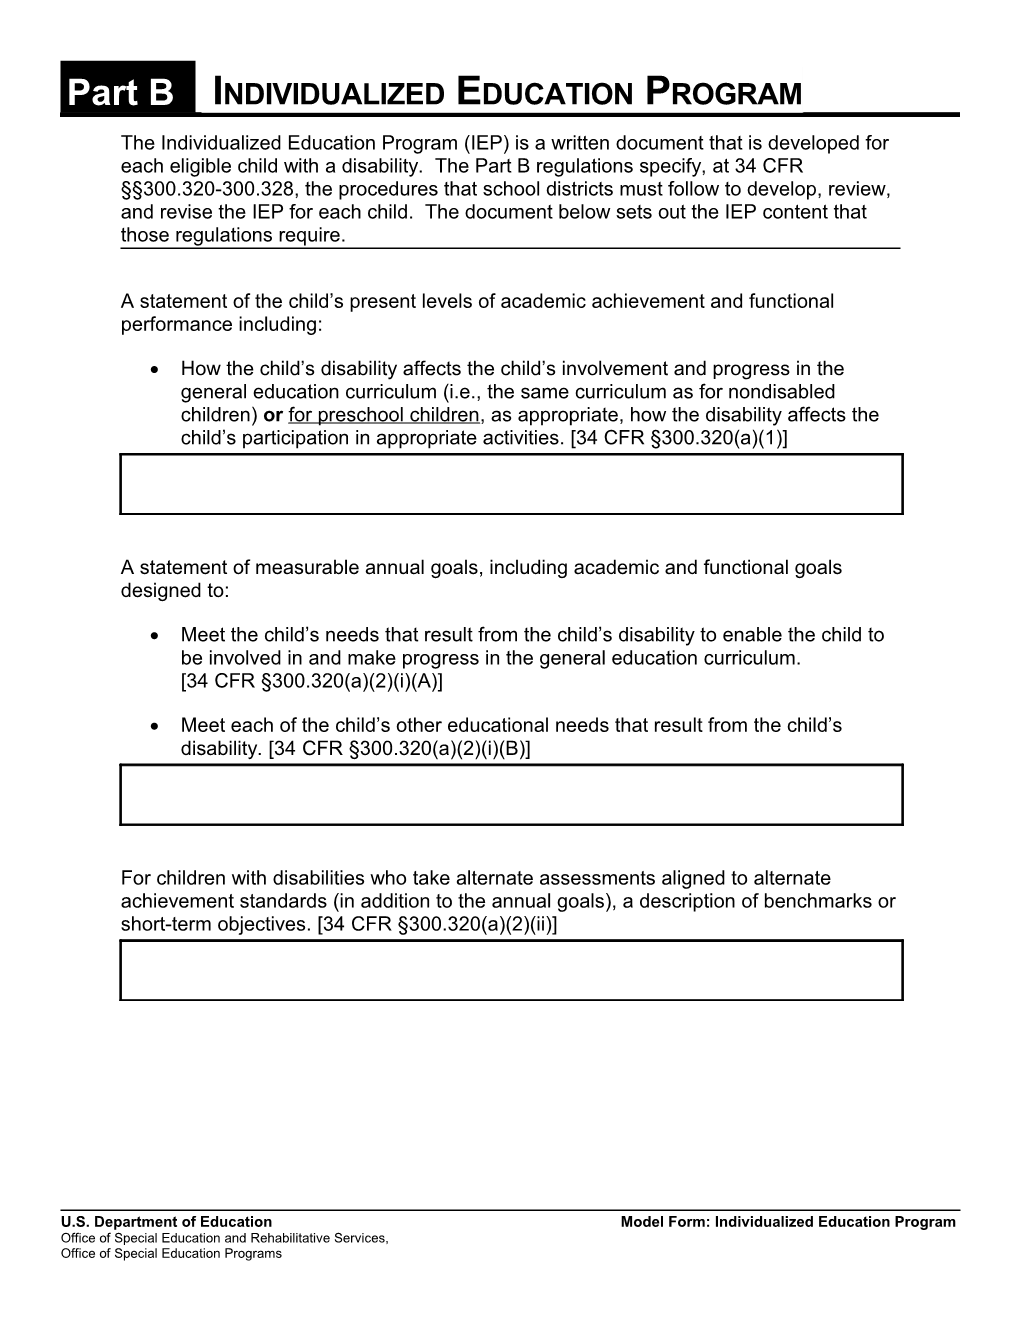 IDEA 2004 Model Form: Part B Individualized Education Program (MS Word)